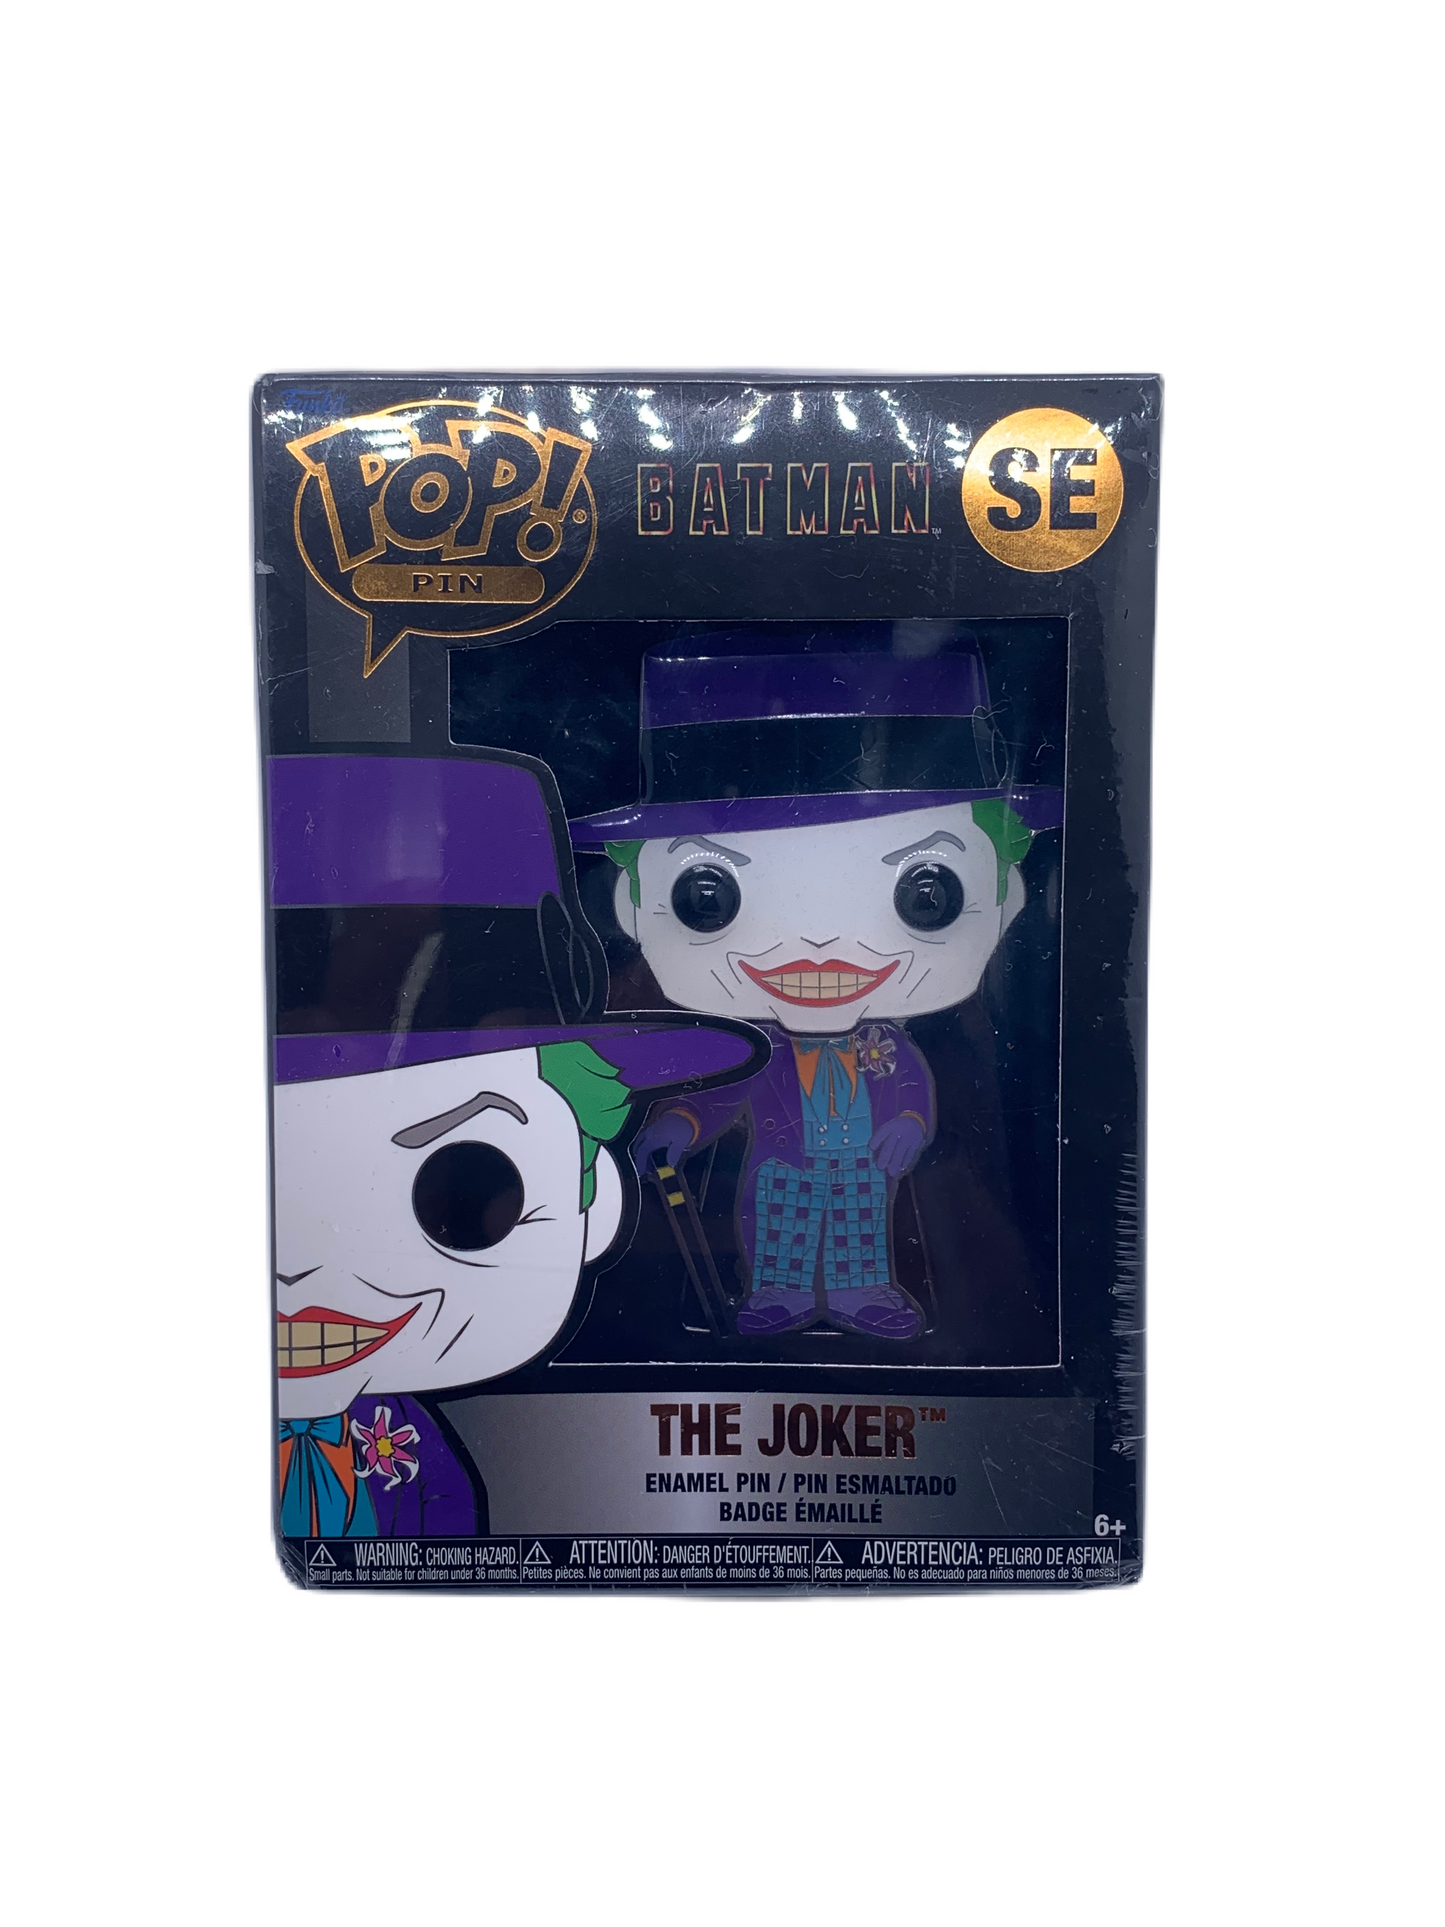 The Joker SE Funko Pop Pin